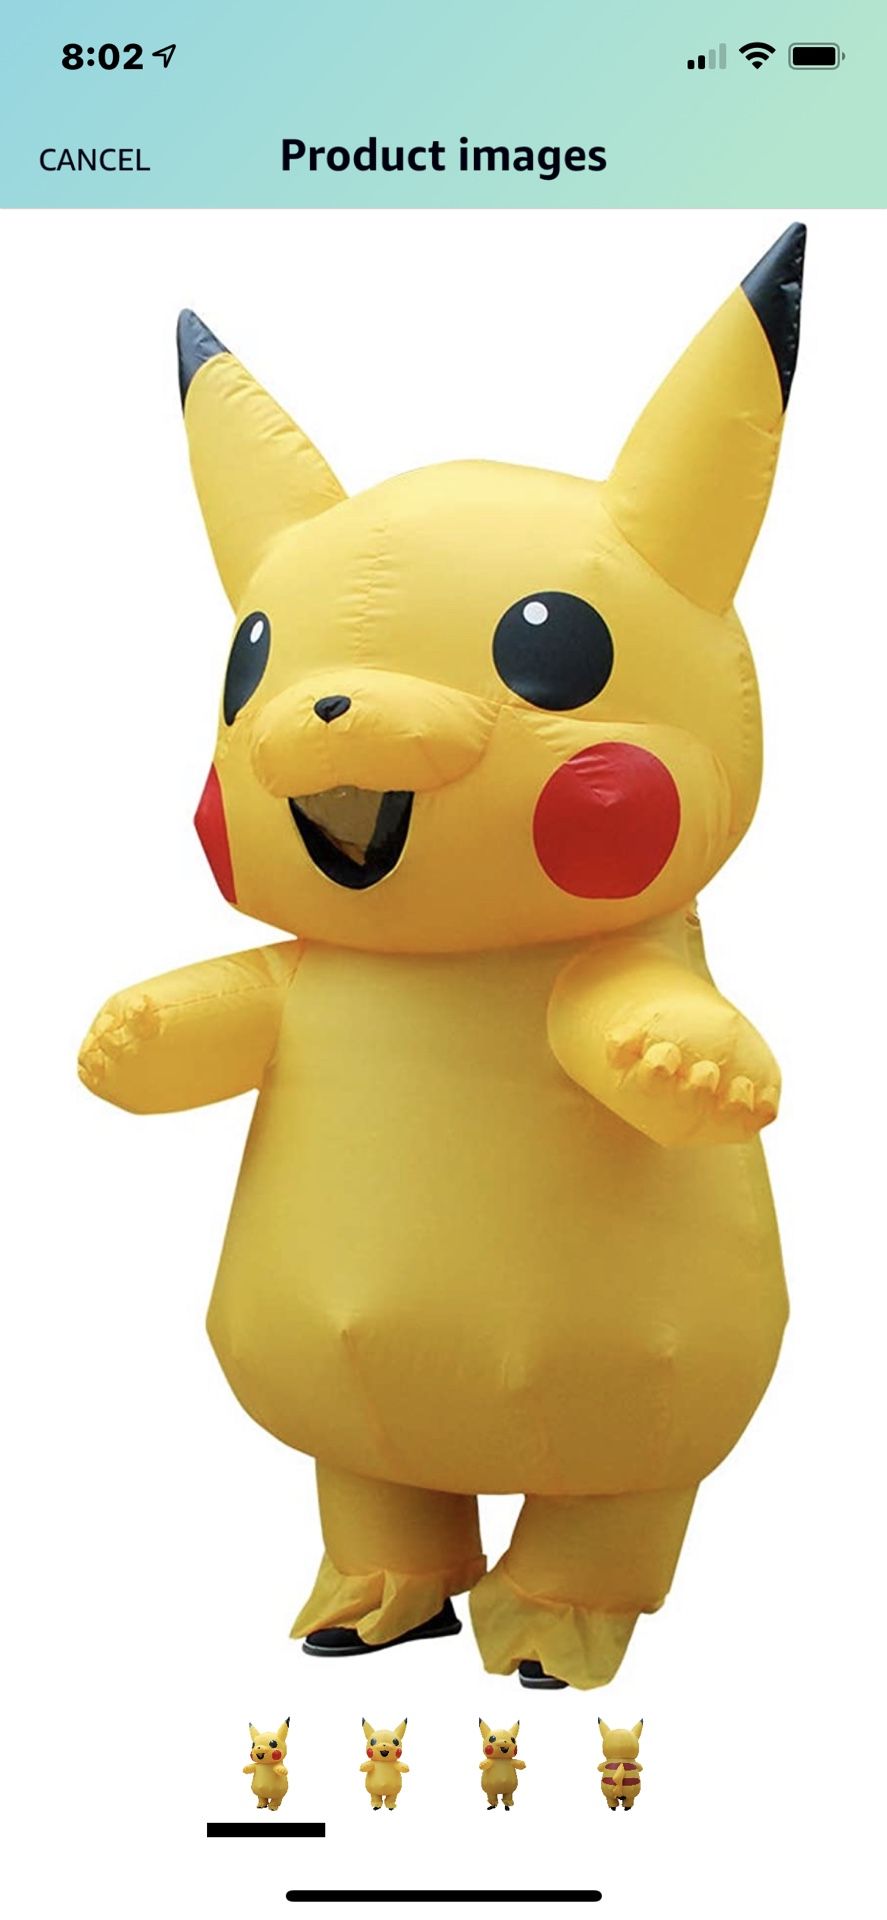 Inflatable Pikachu Costume